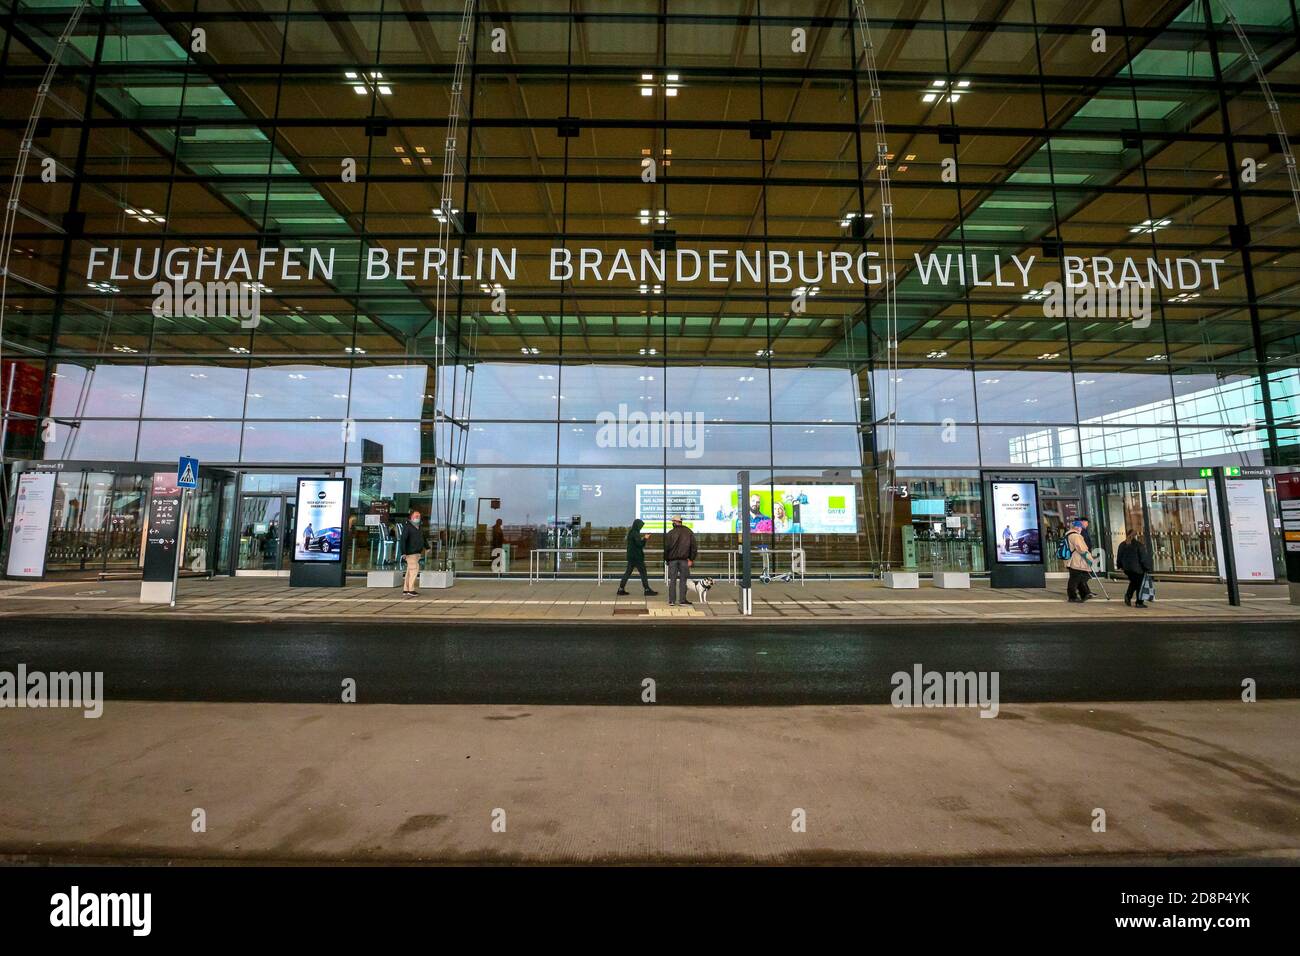 Exterior of Terminal 1 of newly opened Berlin Brandenburg International Airport (BER), or Flughafen Berlin Brandenburg Willy Brandt. Stock Photo